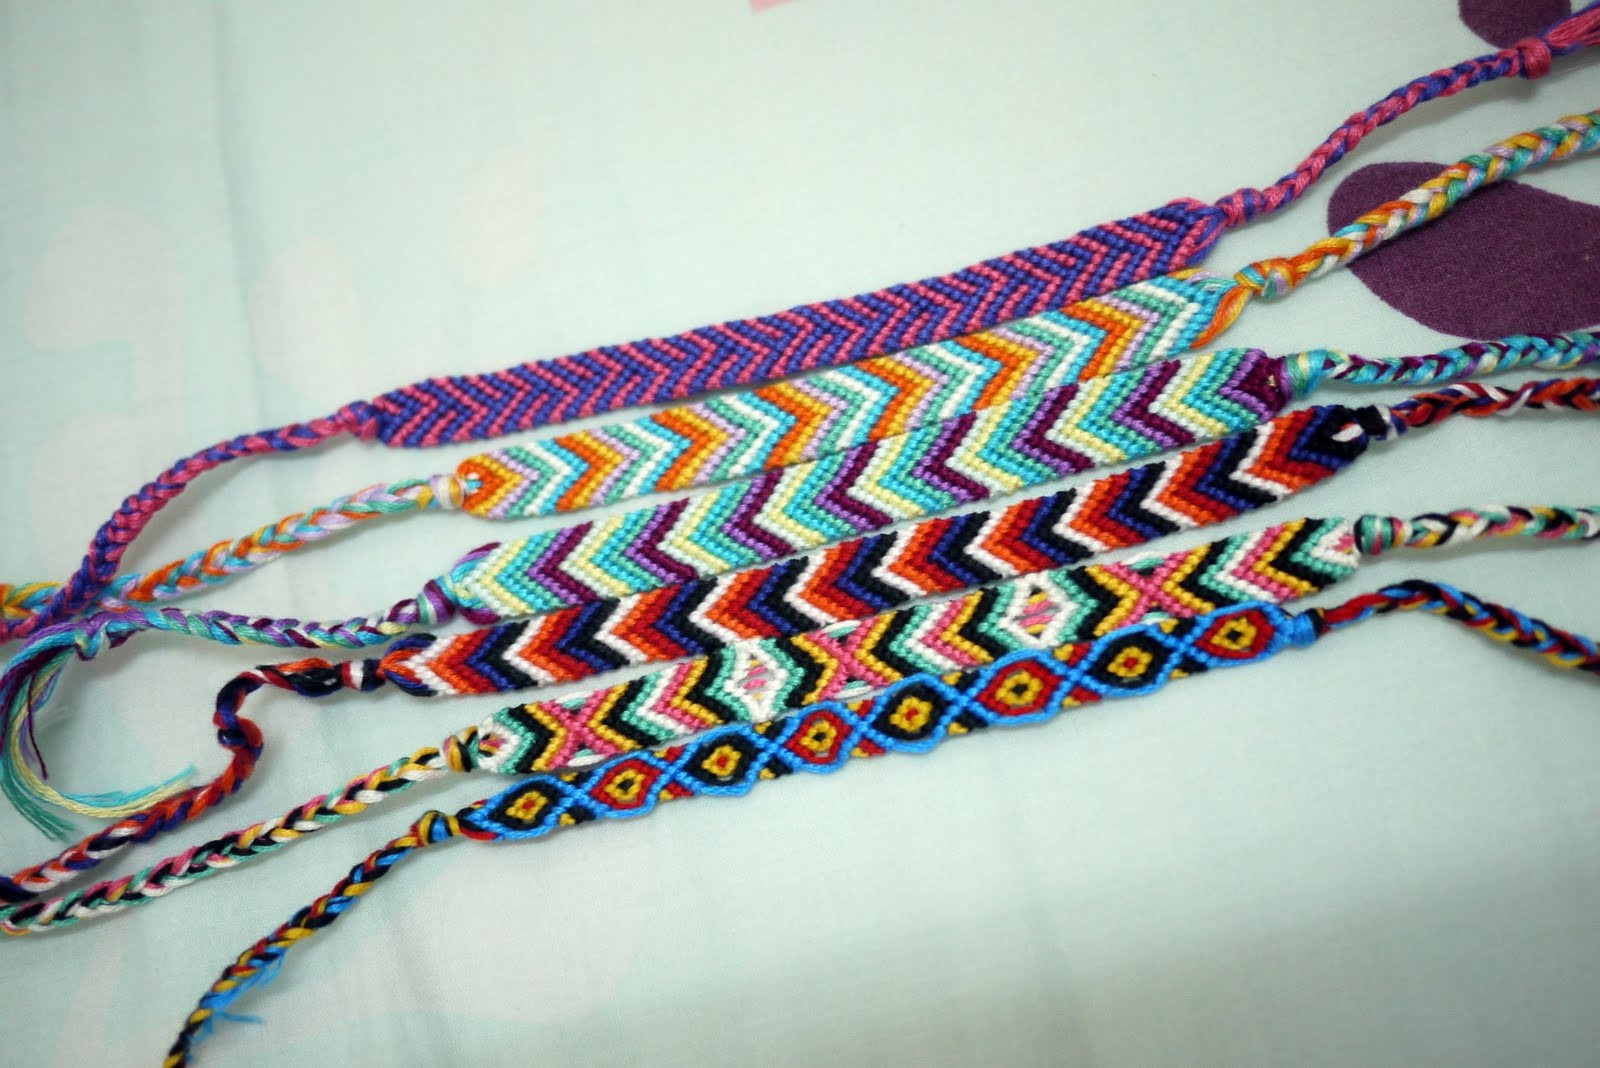 Best ideas about DIY Friendship Bracelets Patterns
. Save or Pin I love lace and ruffles DIY Friendship Bracelets Now.